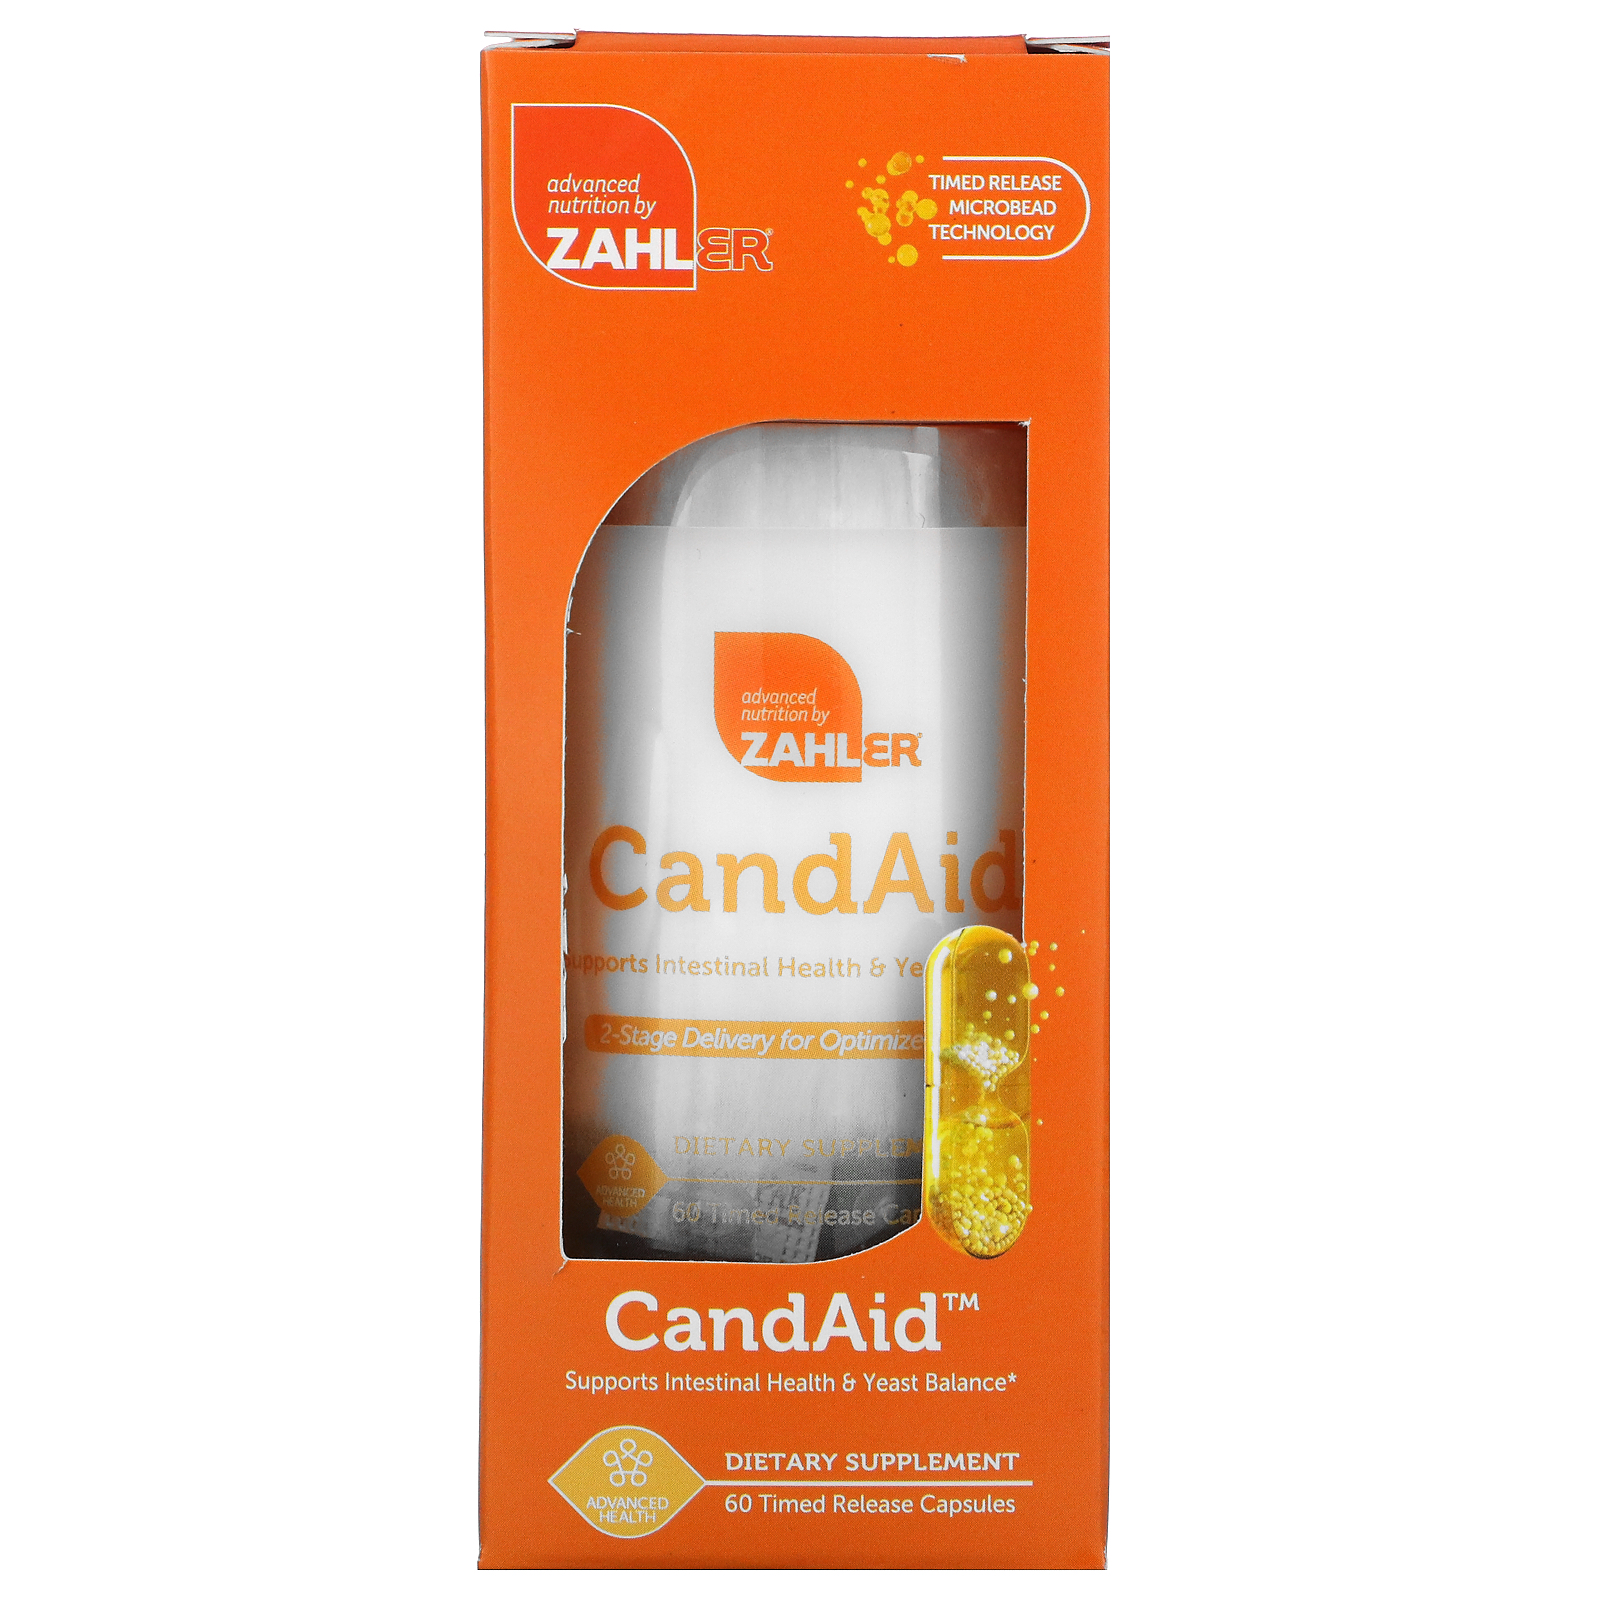 Zahler, CandAid（キャンドエイド）、お腹の健康と酵母バランスをサポート、持続放出カプセル60粒